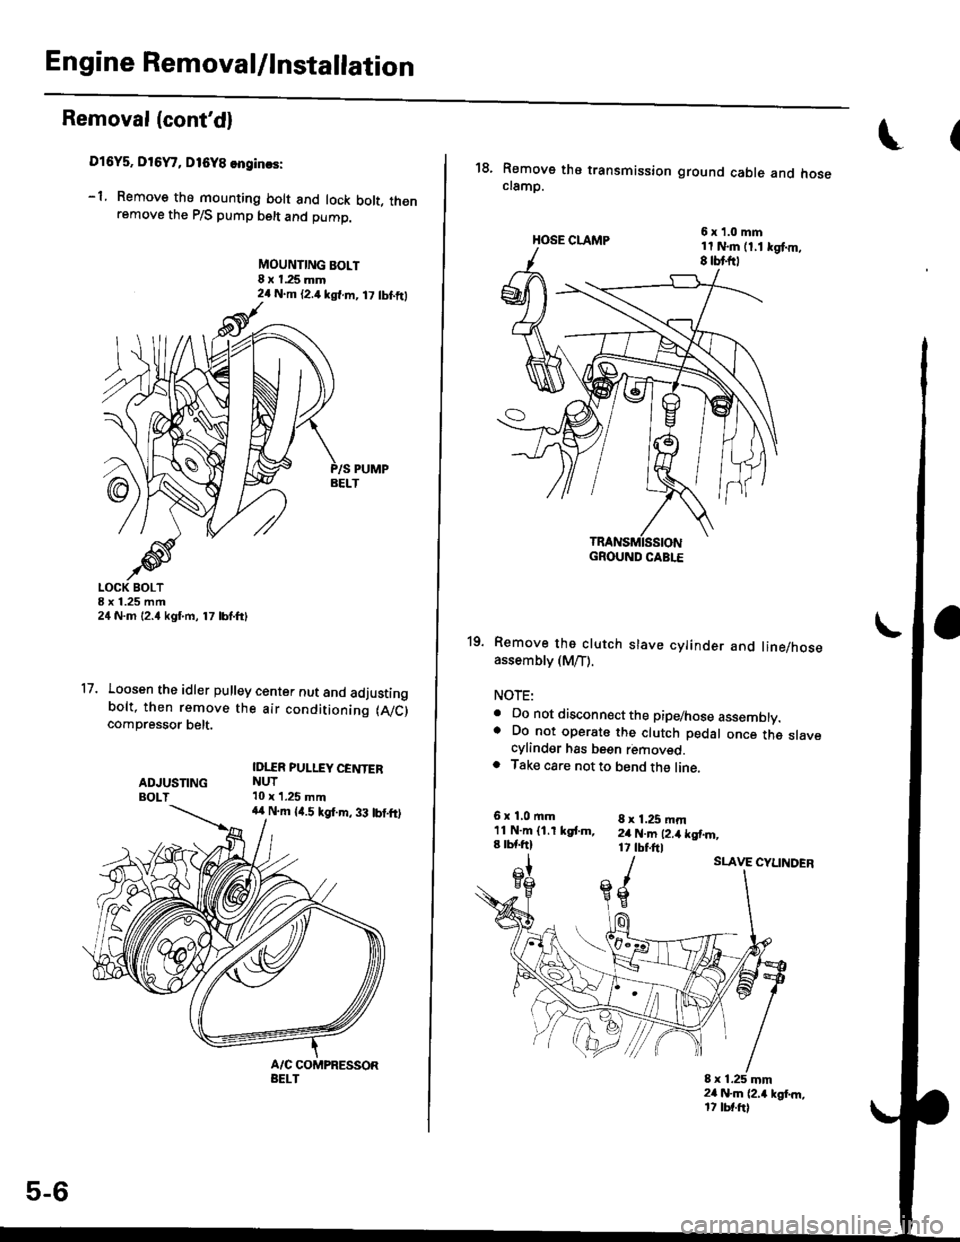 HONDA CIVIC 2000 6.G Workshop Manual Engine Removal/lnstailation
Removal (contdl
Dl6Y5. DrGYr, D16Y8 enginas:
-1. Remove the mounting bolt and lock bolt, thenremove the P/S pump belt and pump.
MOUNTING BOLT8 x 1.25 mm24 N.m {2.4 kgl.m, 